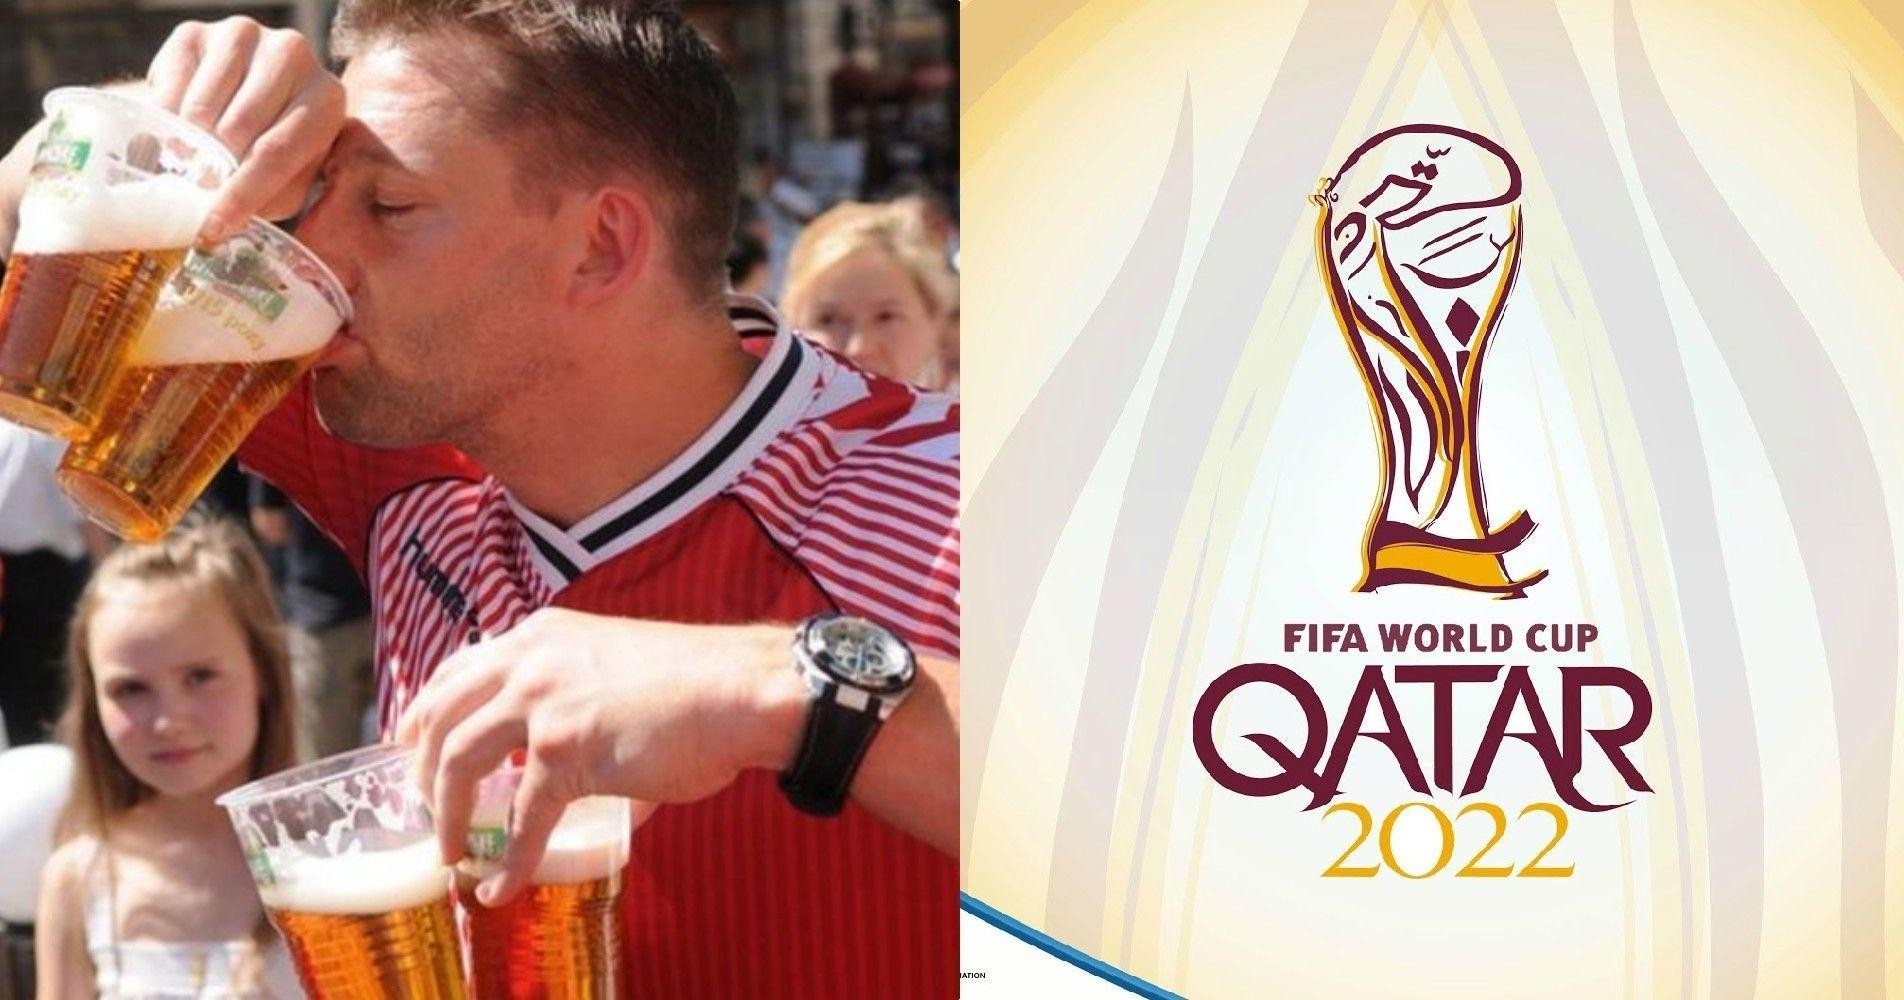 qatar-will-host-the-2022-fifa-world-cup-1546404115-1663840627.jpg